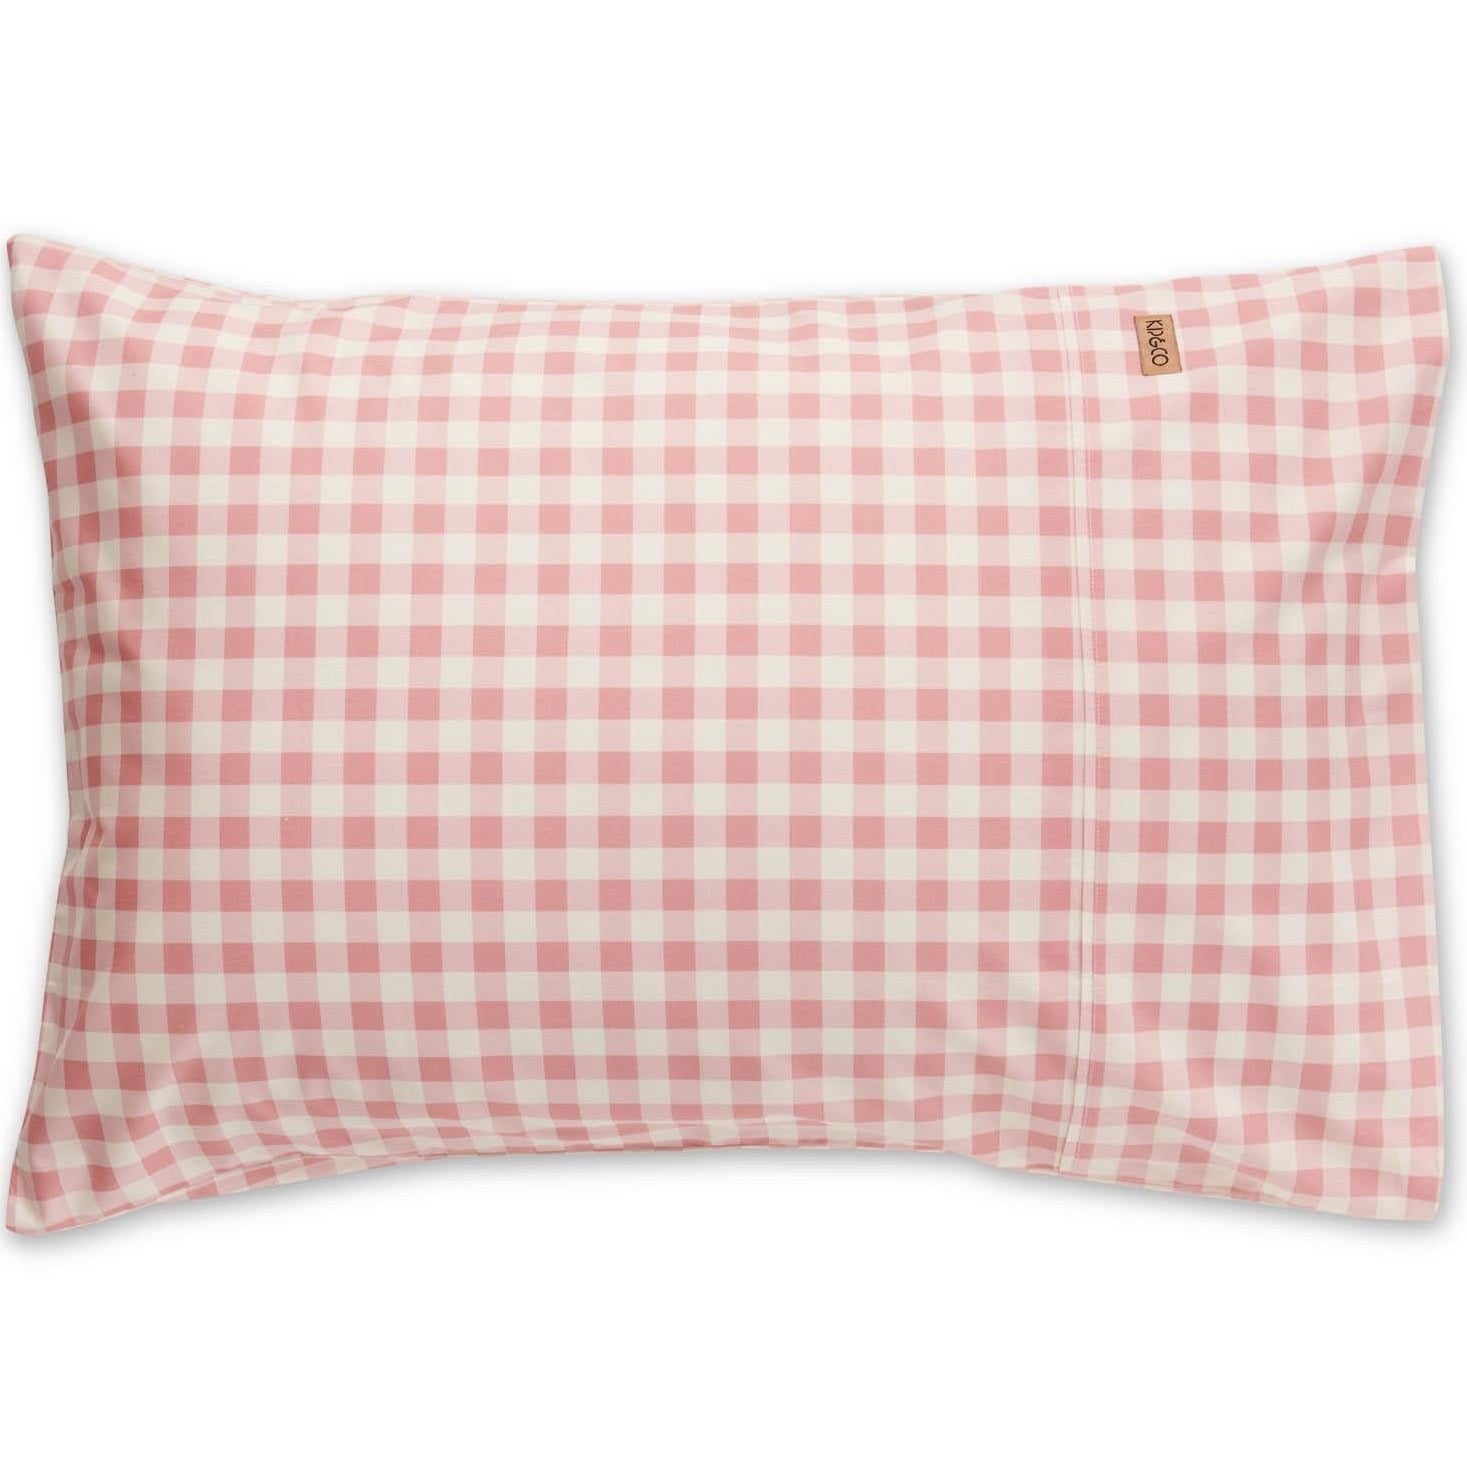 Gingham Candy Organic Cotton Pillowcase Set